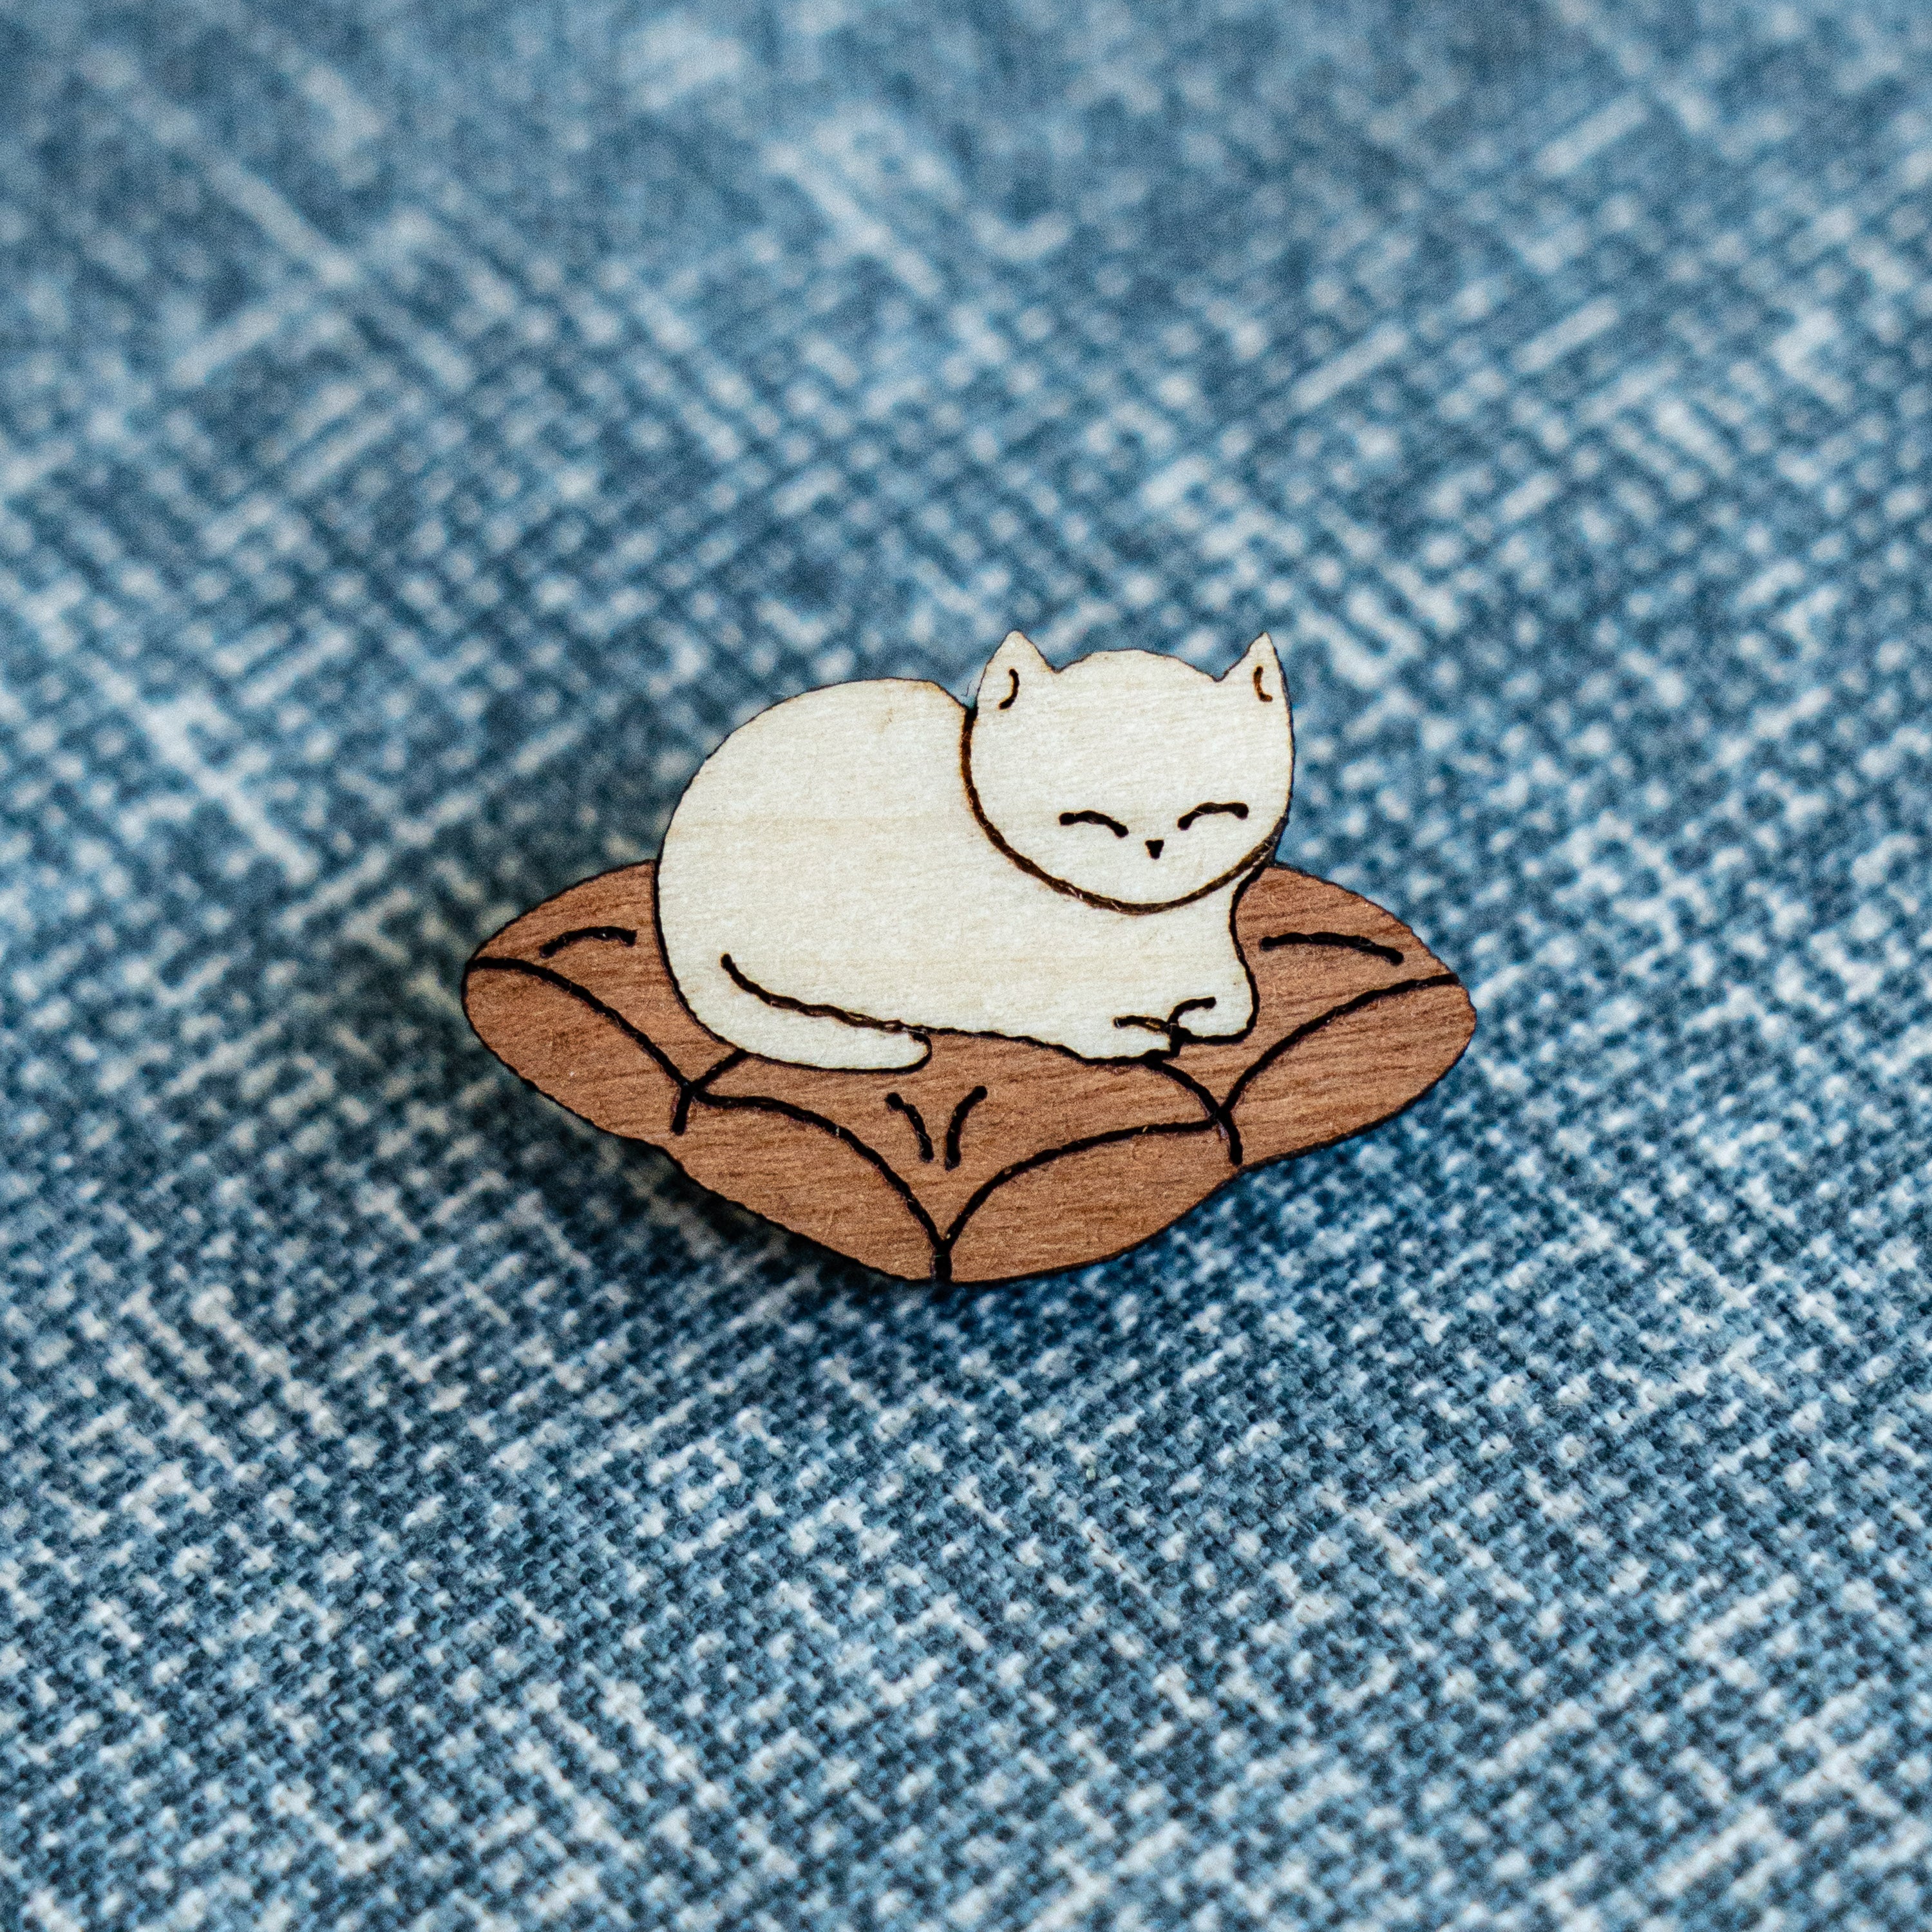 Cat on Pillow Wood Pin